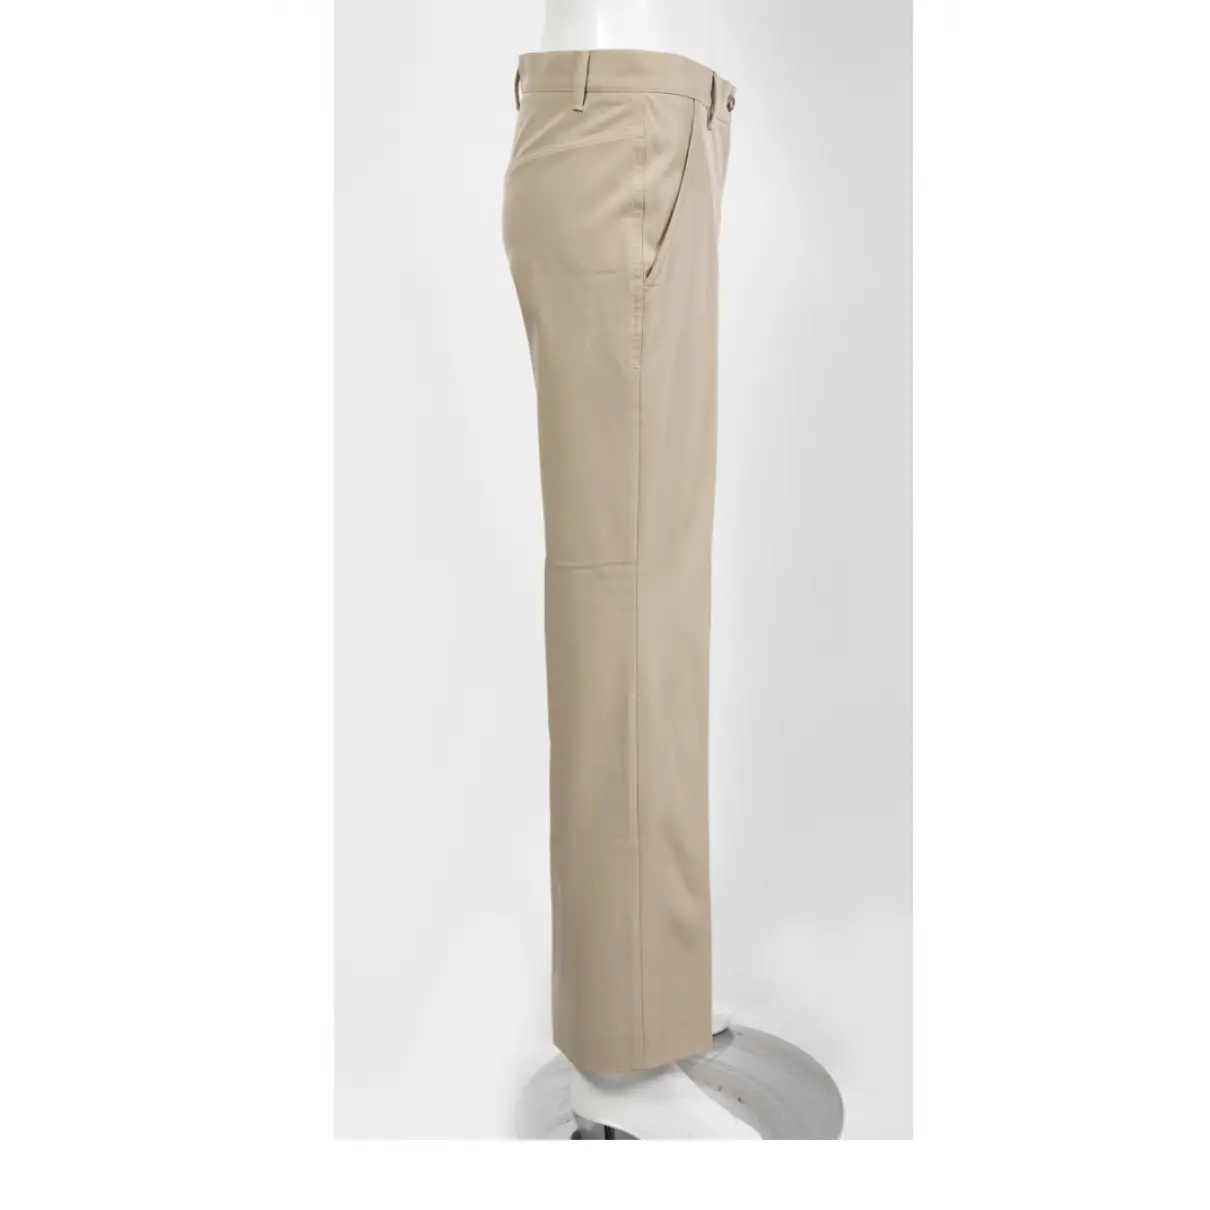 Buy Prada Trousers online